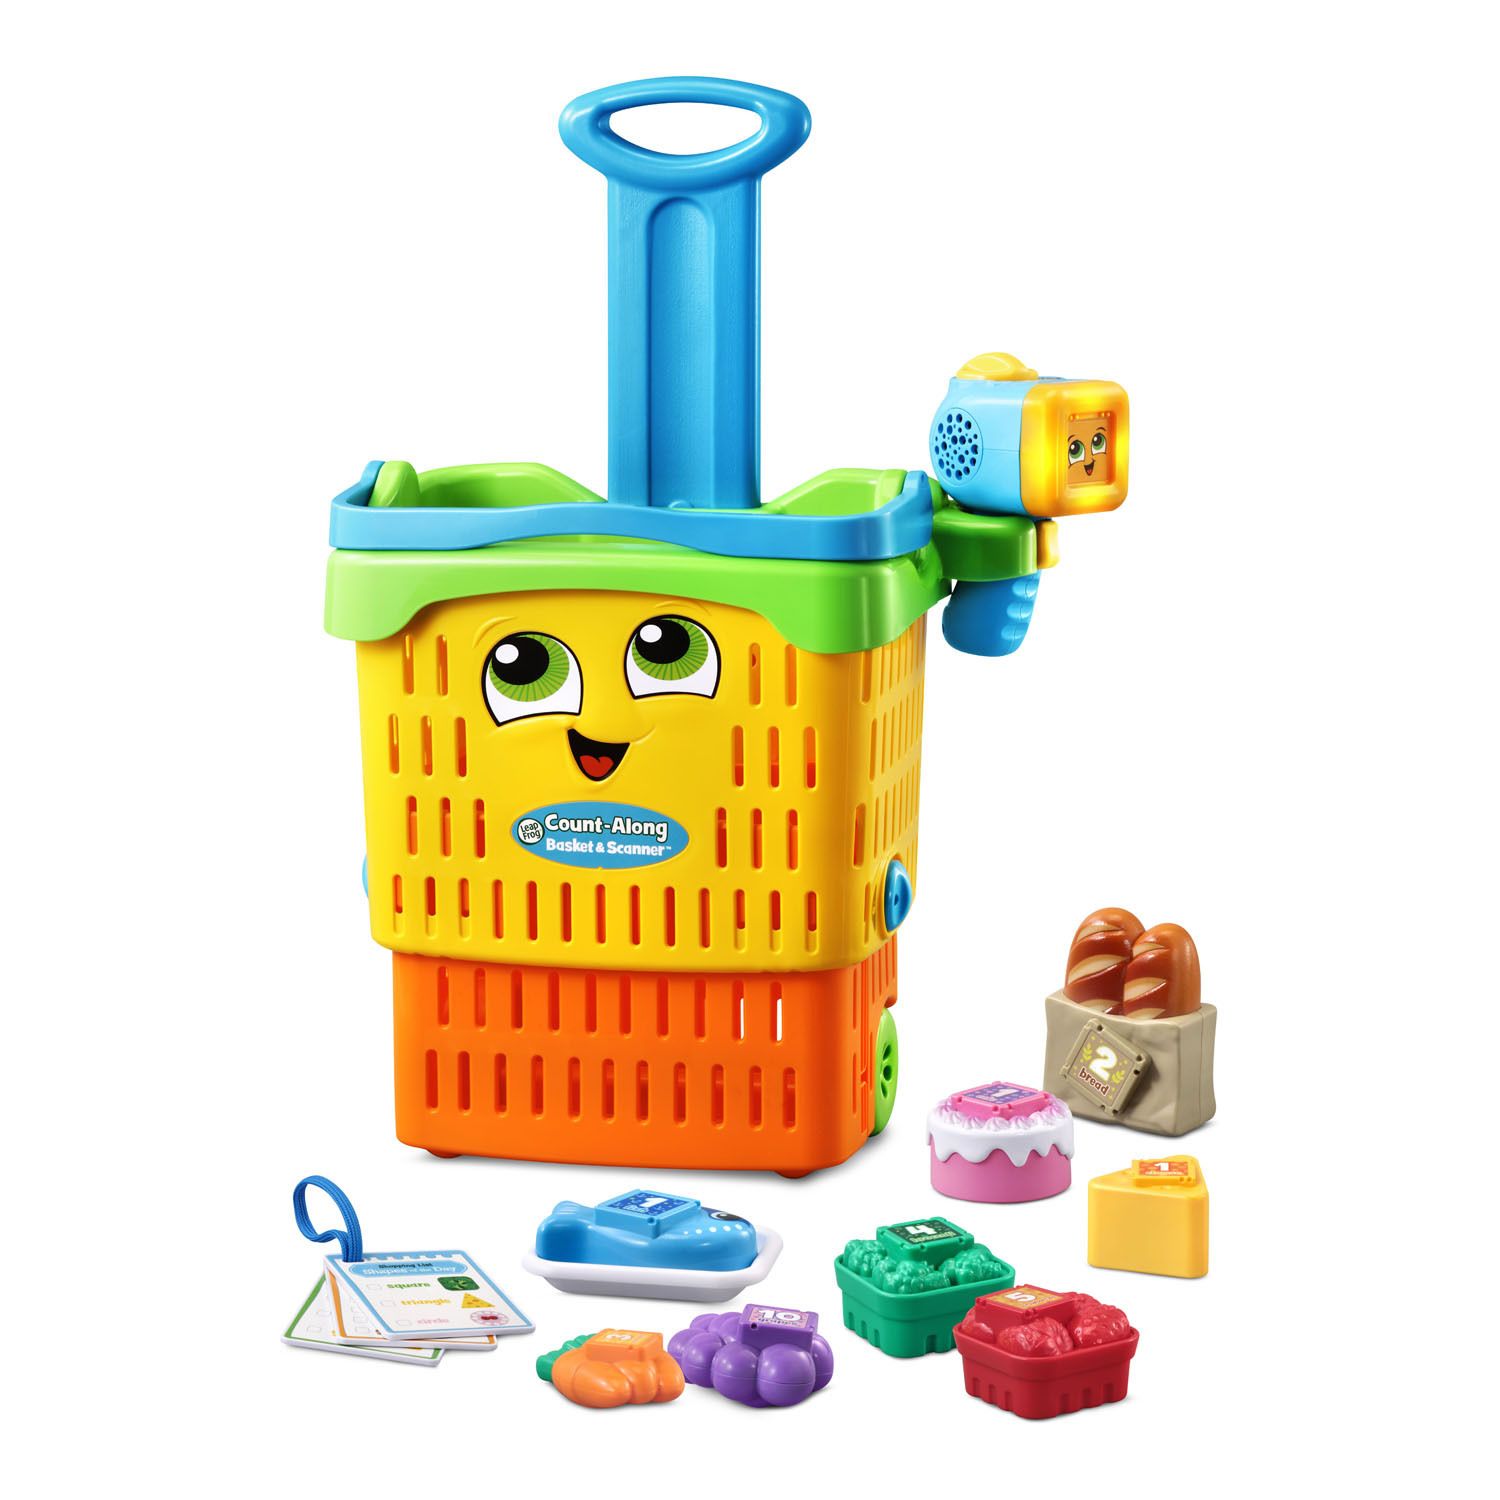 Image for LeapFrog Count-Along Basket & Scanner Learning Educational Toy at Kohl's.